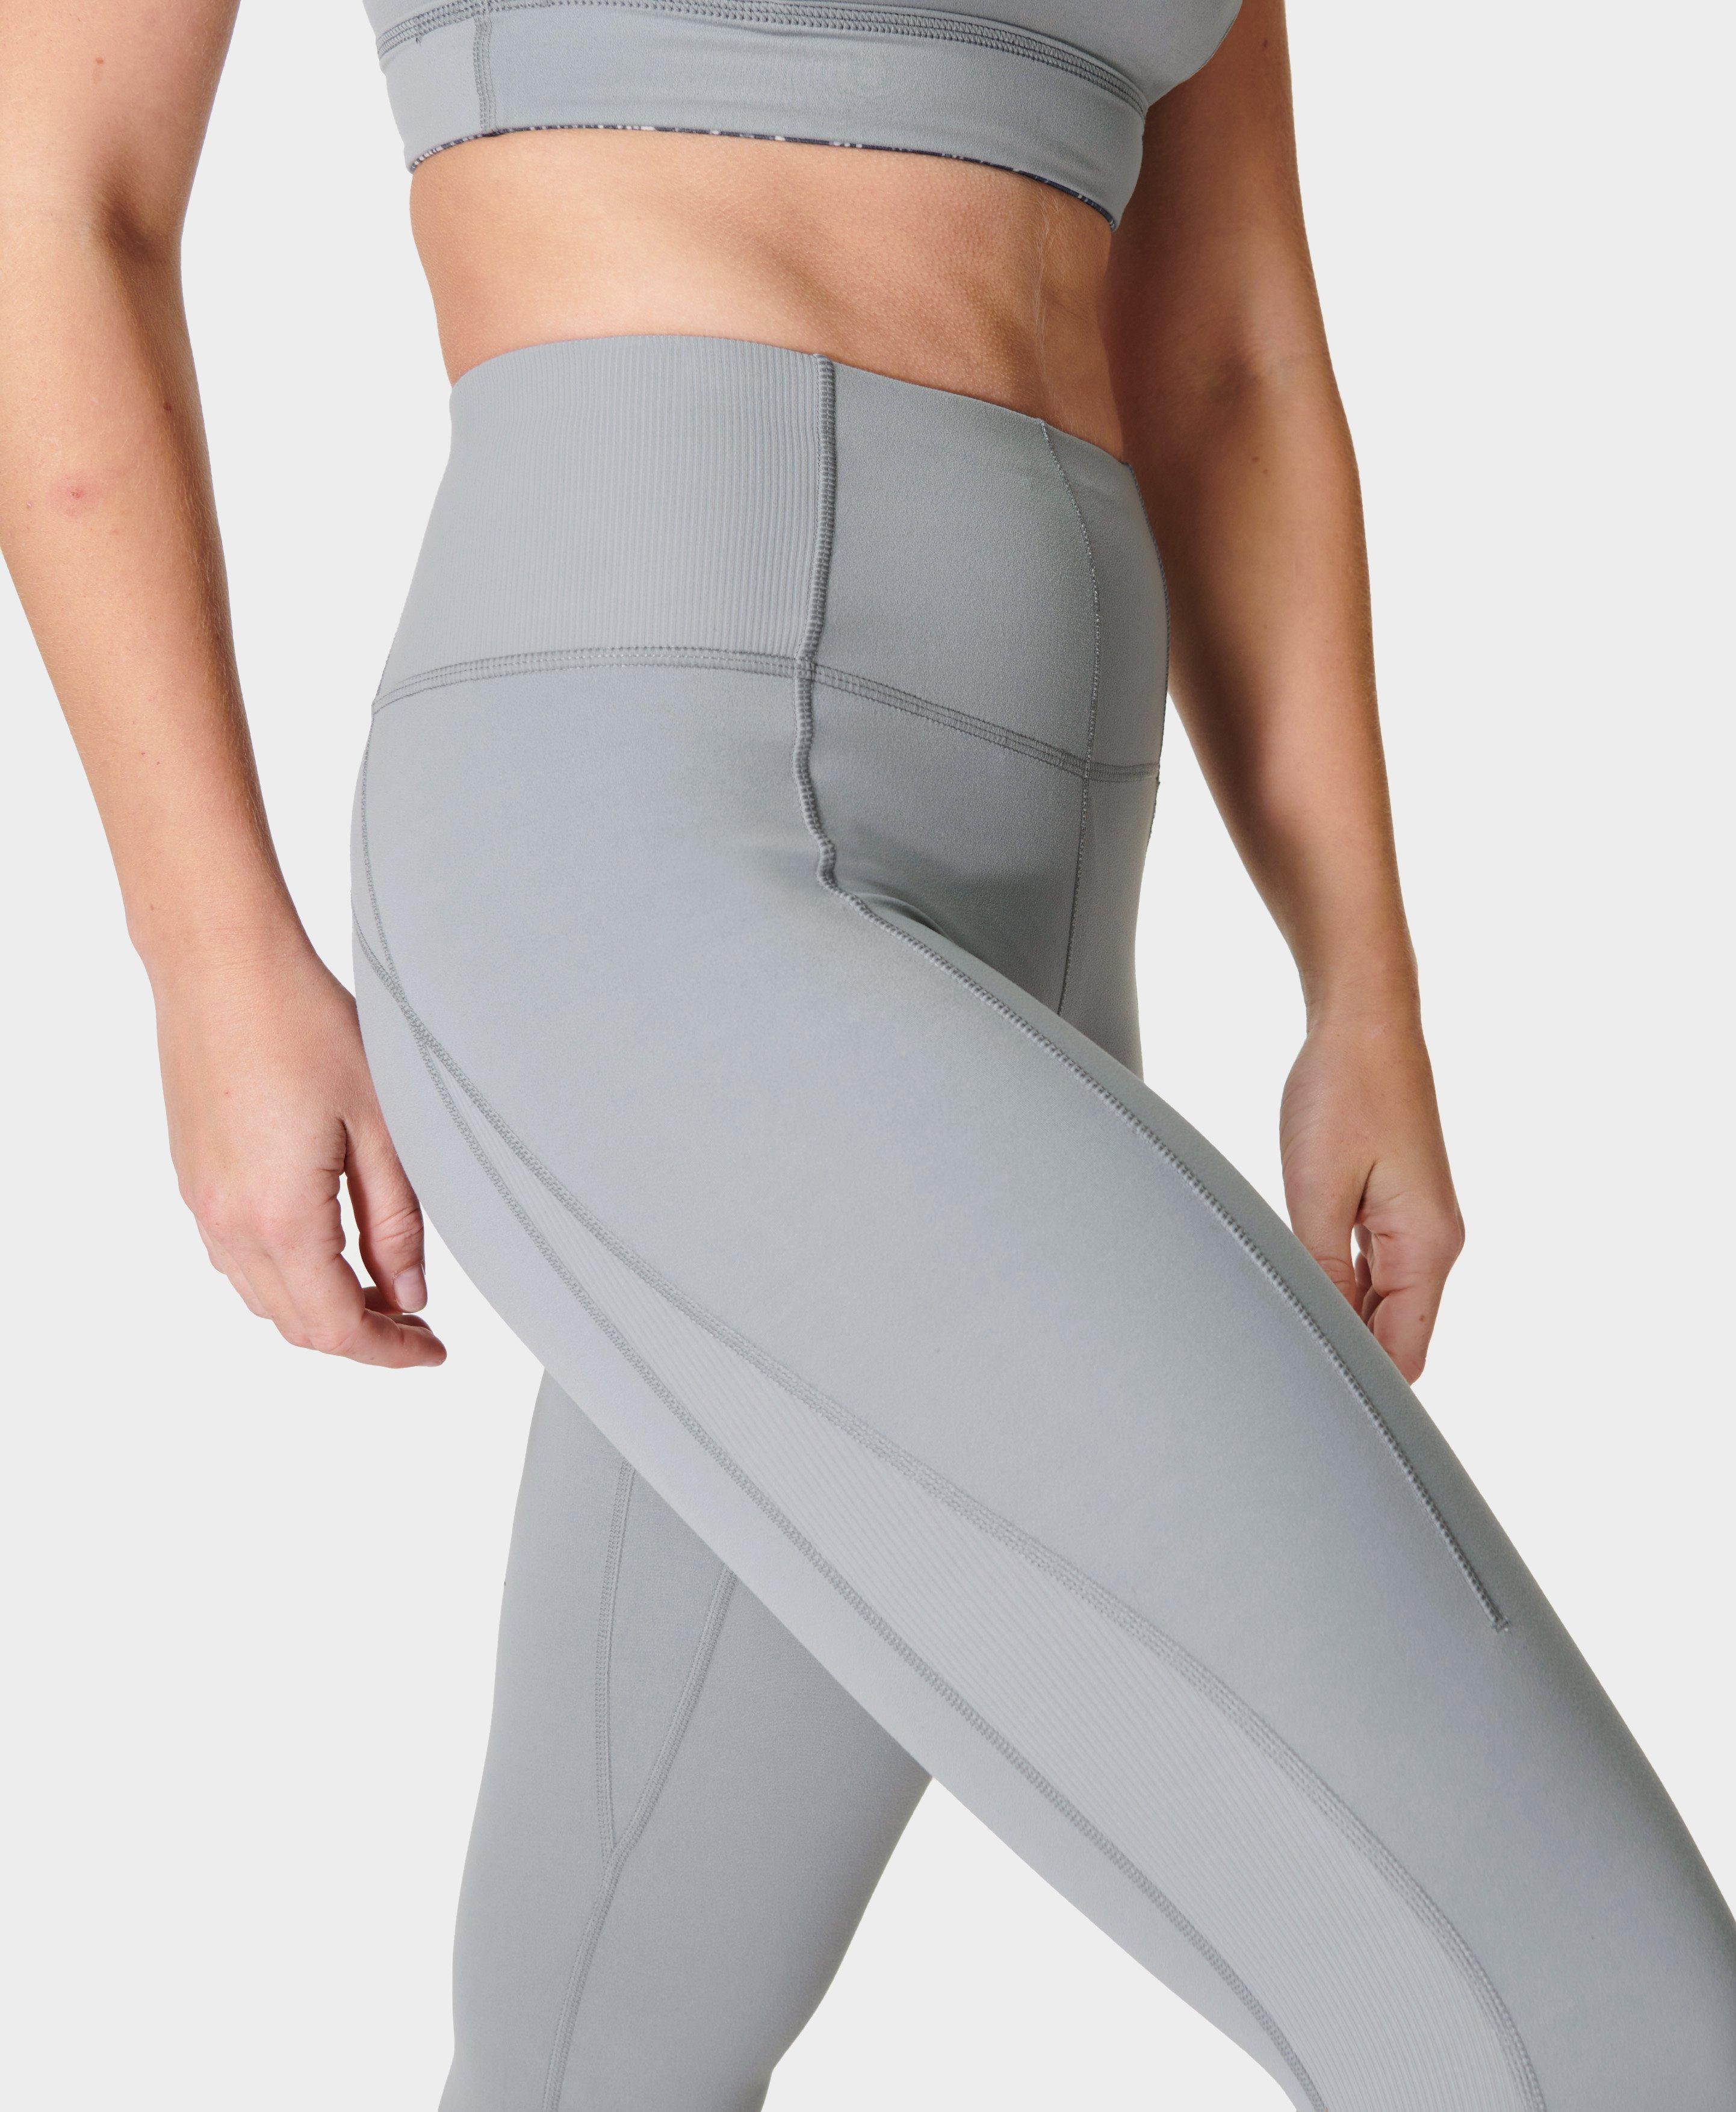 lululemon - Align super high waist full length tights in dark grey